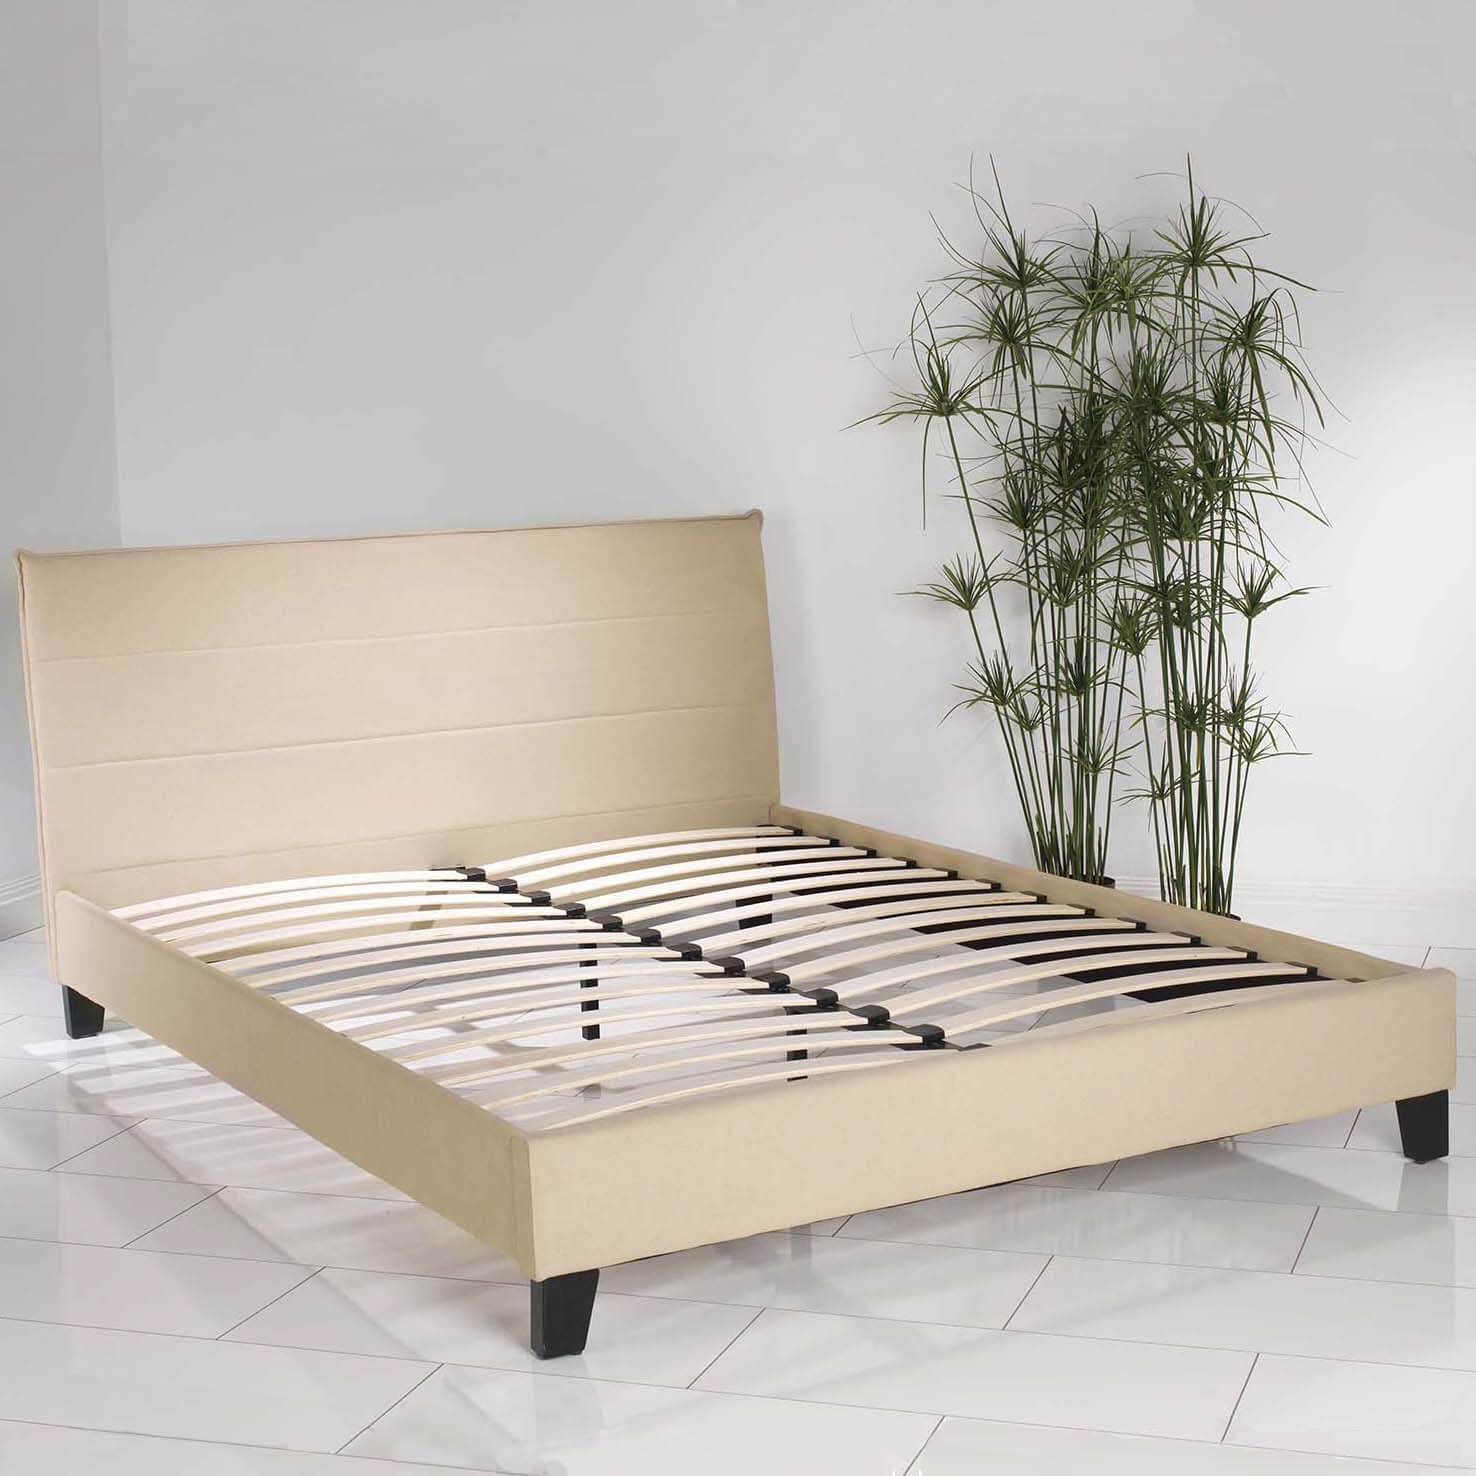 Modern King Size Bed – Sand Linen Upholstered